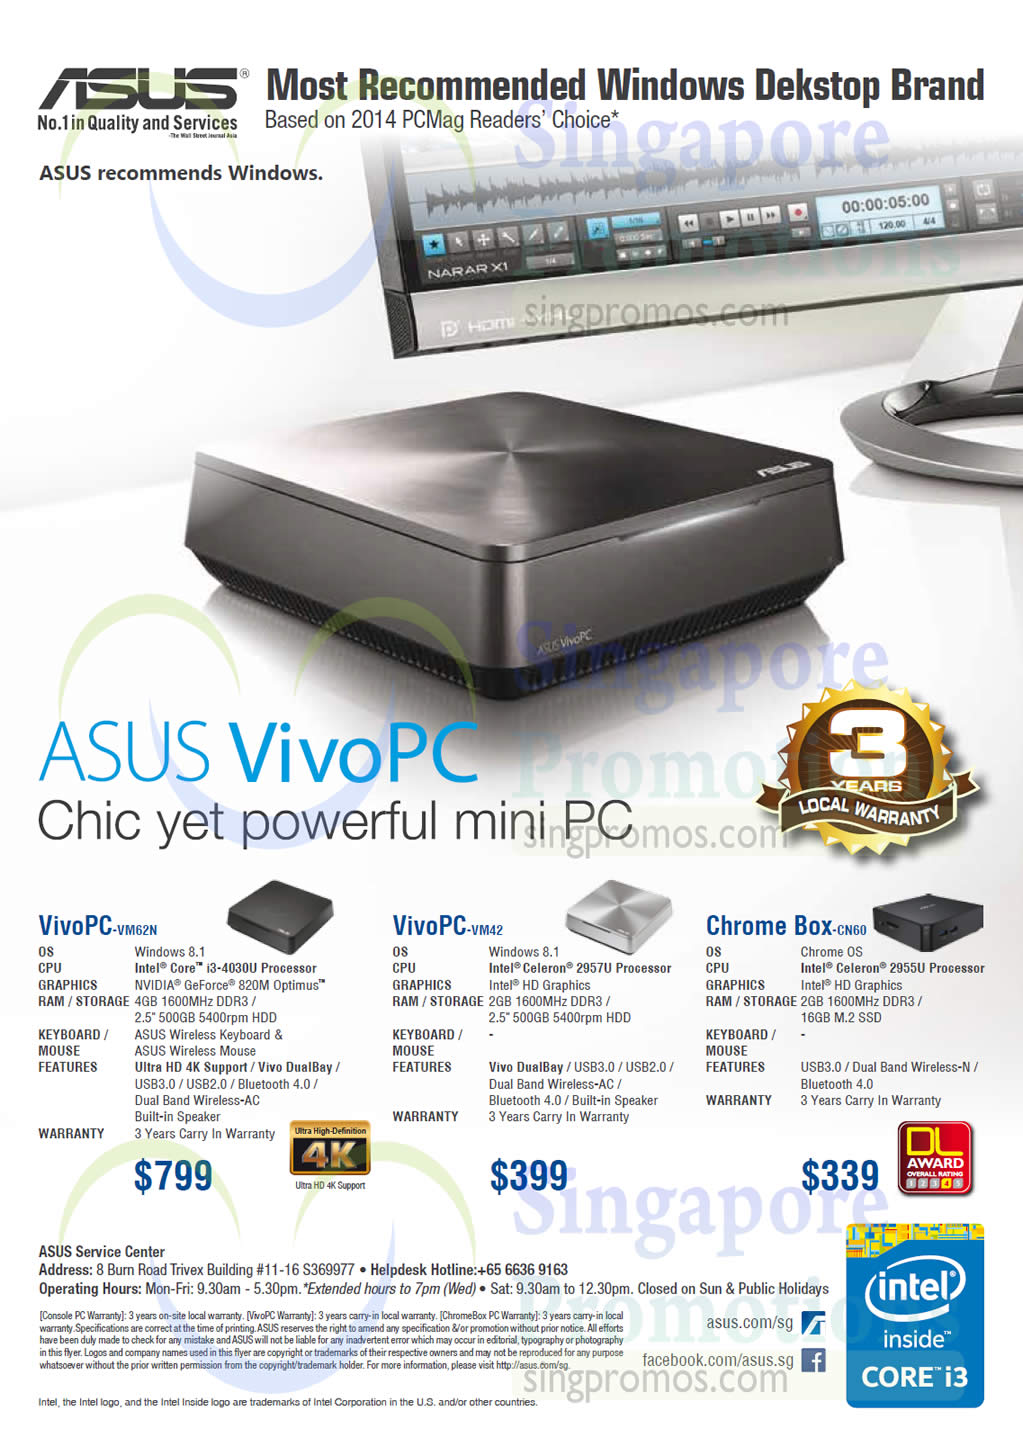 PCs VivoPC-VM62N, VivoPC-VM42, Chrome Box-CN60 » Asus Desktop PCs, Monitors, Networking & Other Accessories Offers 24 Oct 2014 | SINGPromos.com